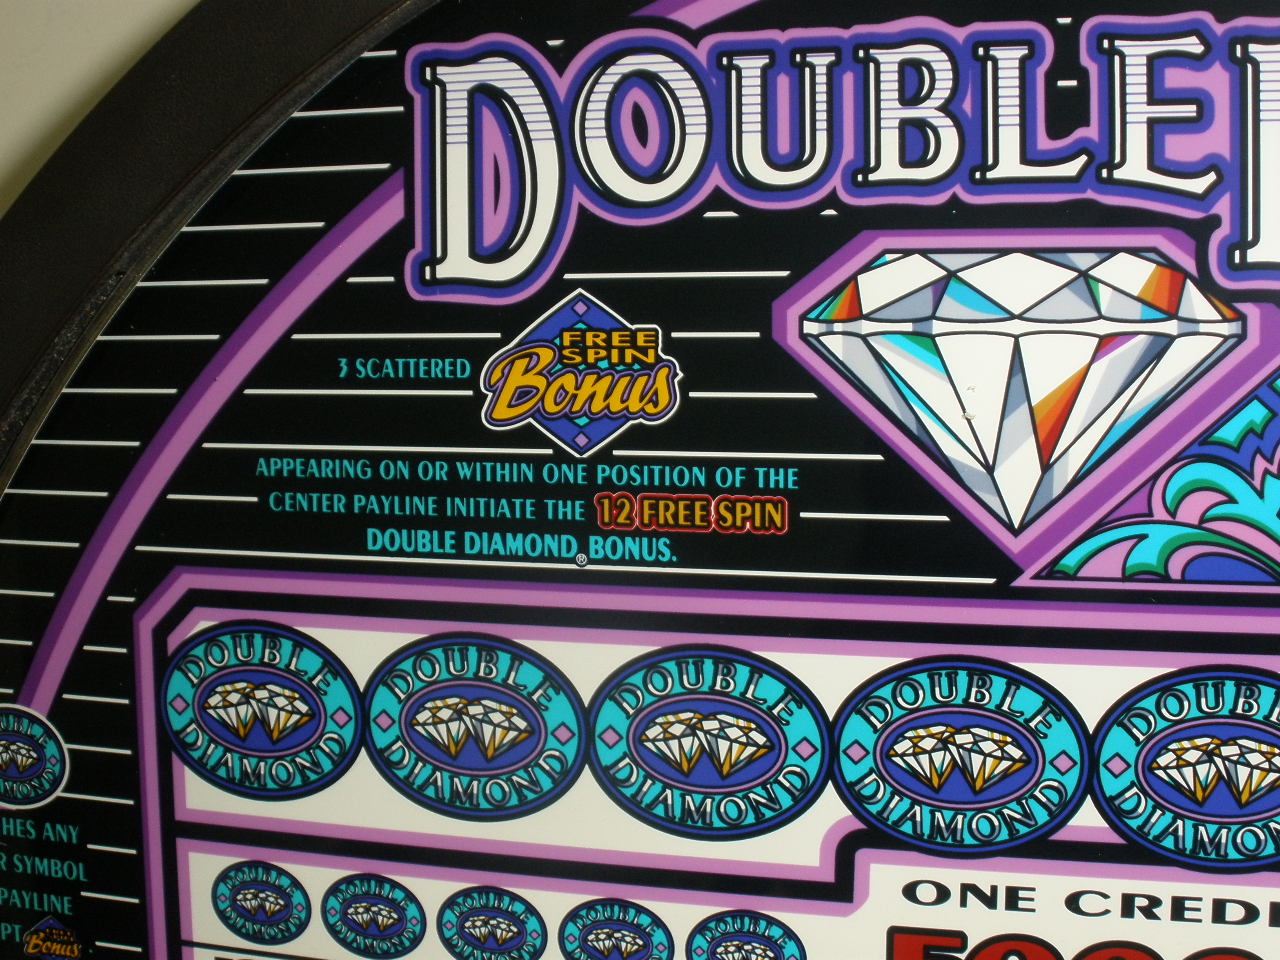 Double Diamond Slot Machine Free